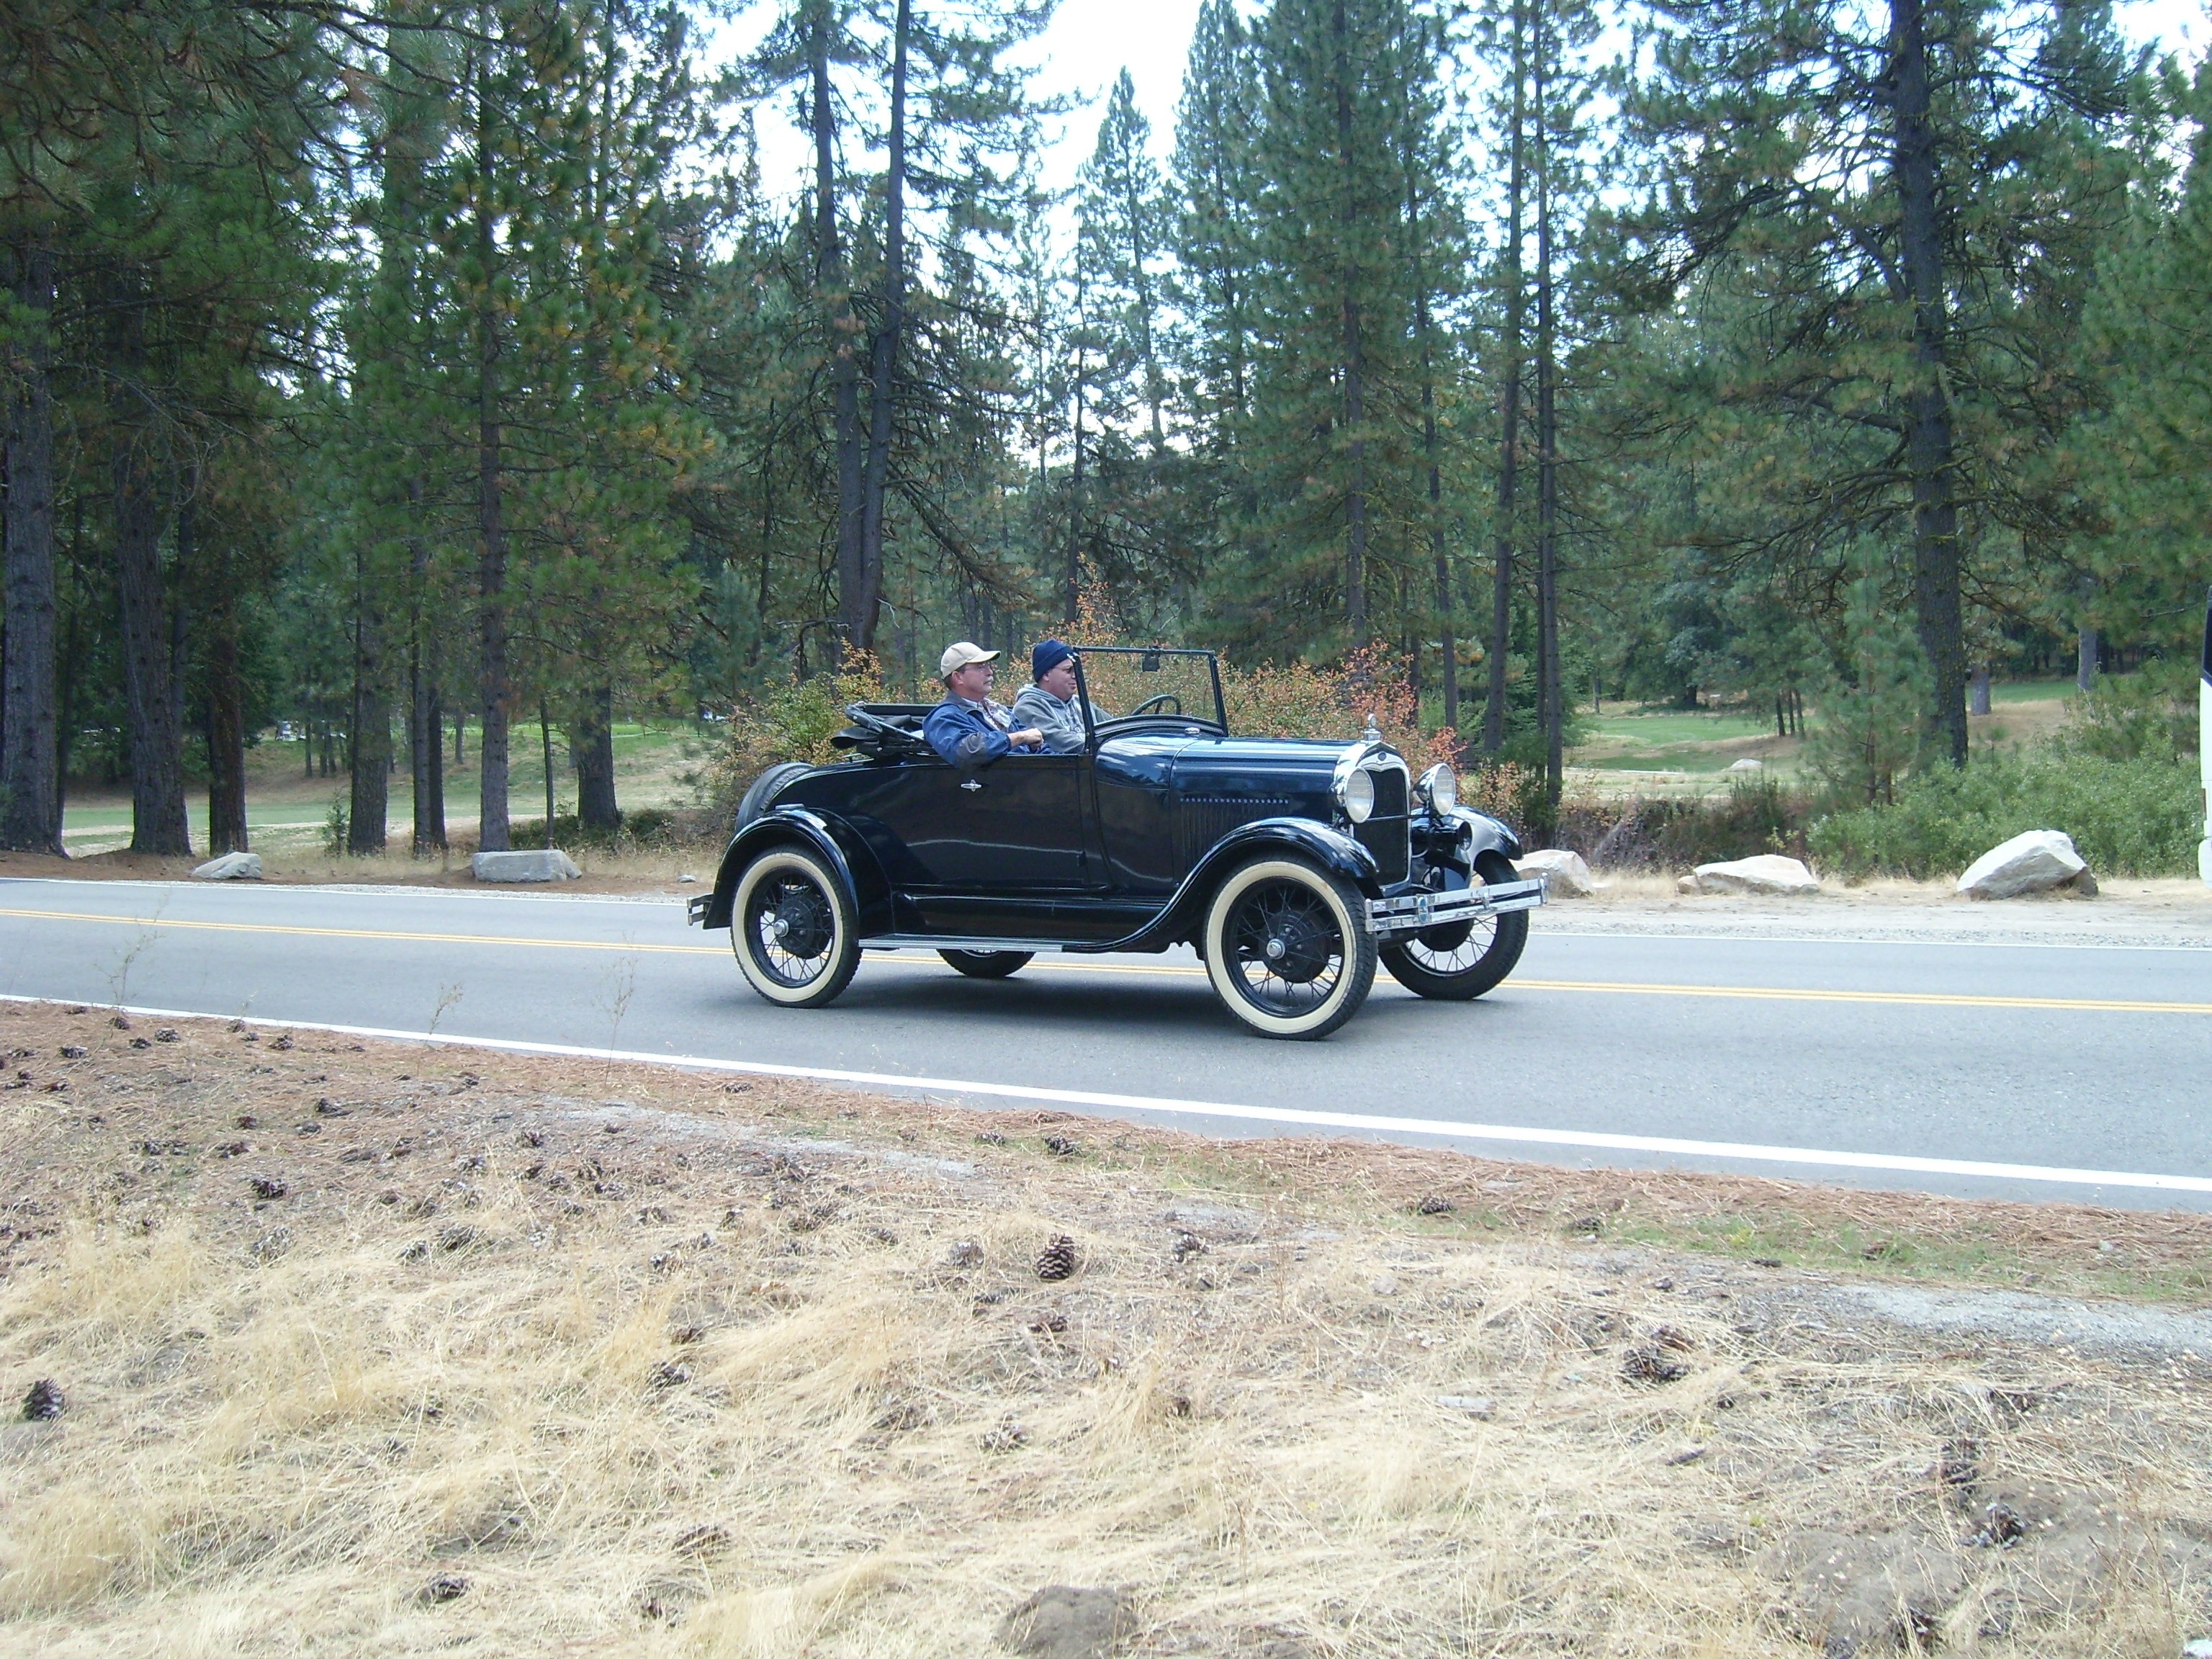 black vintage type car